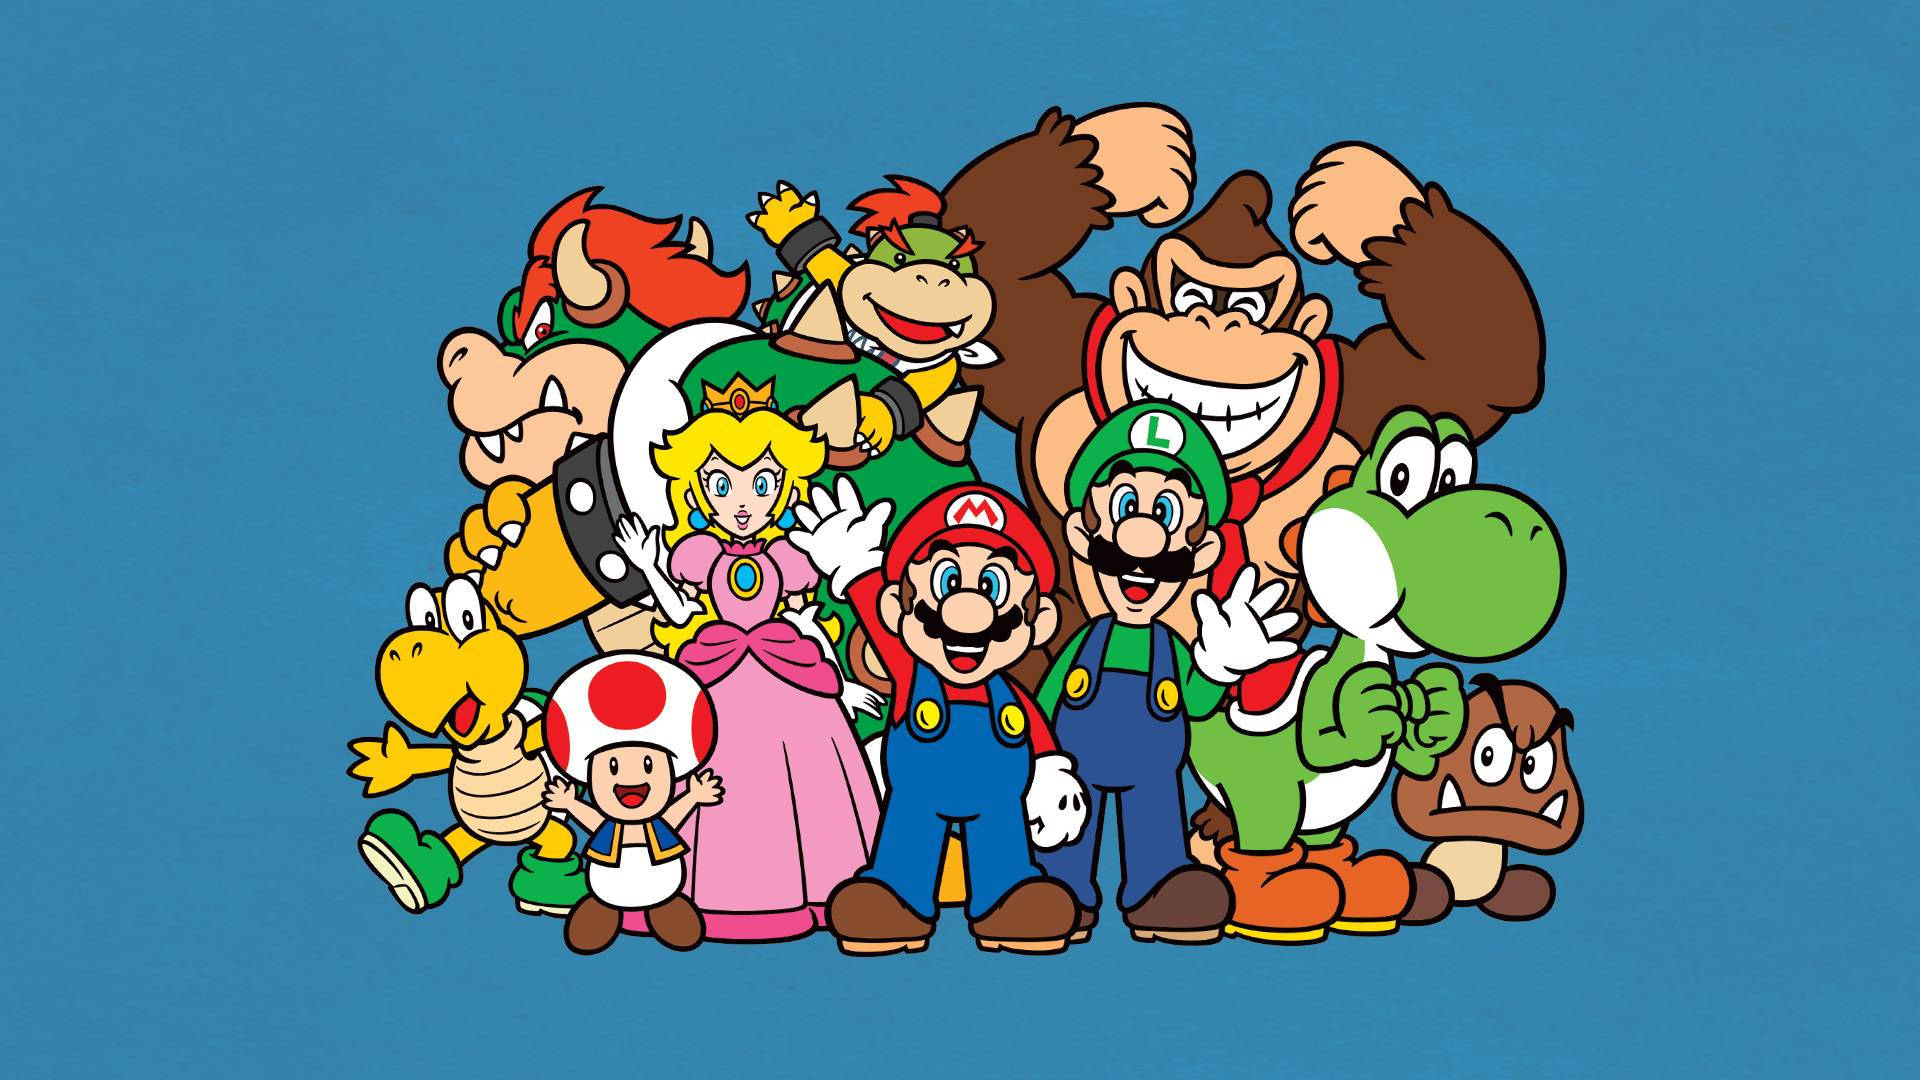 Nintendo happy Super Mario characters wallpaper